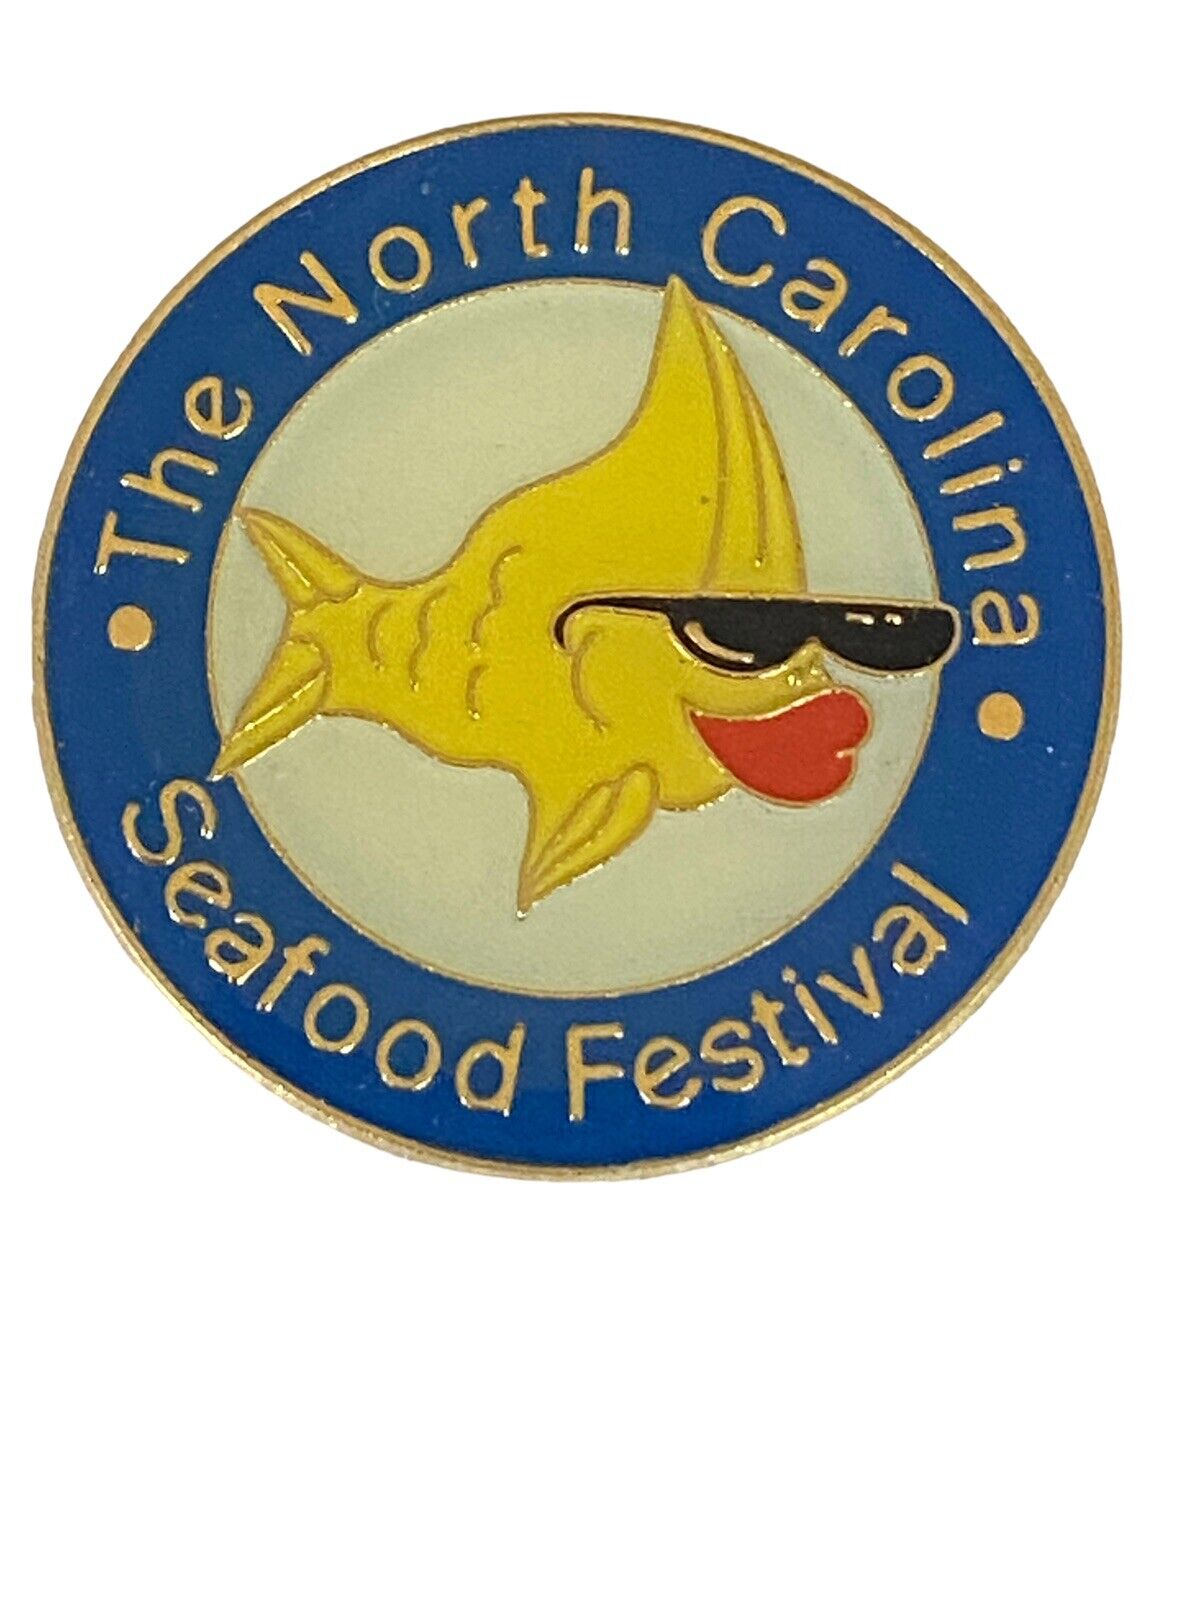 Vintage The North Carolina Seafood Festival Pin